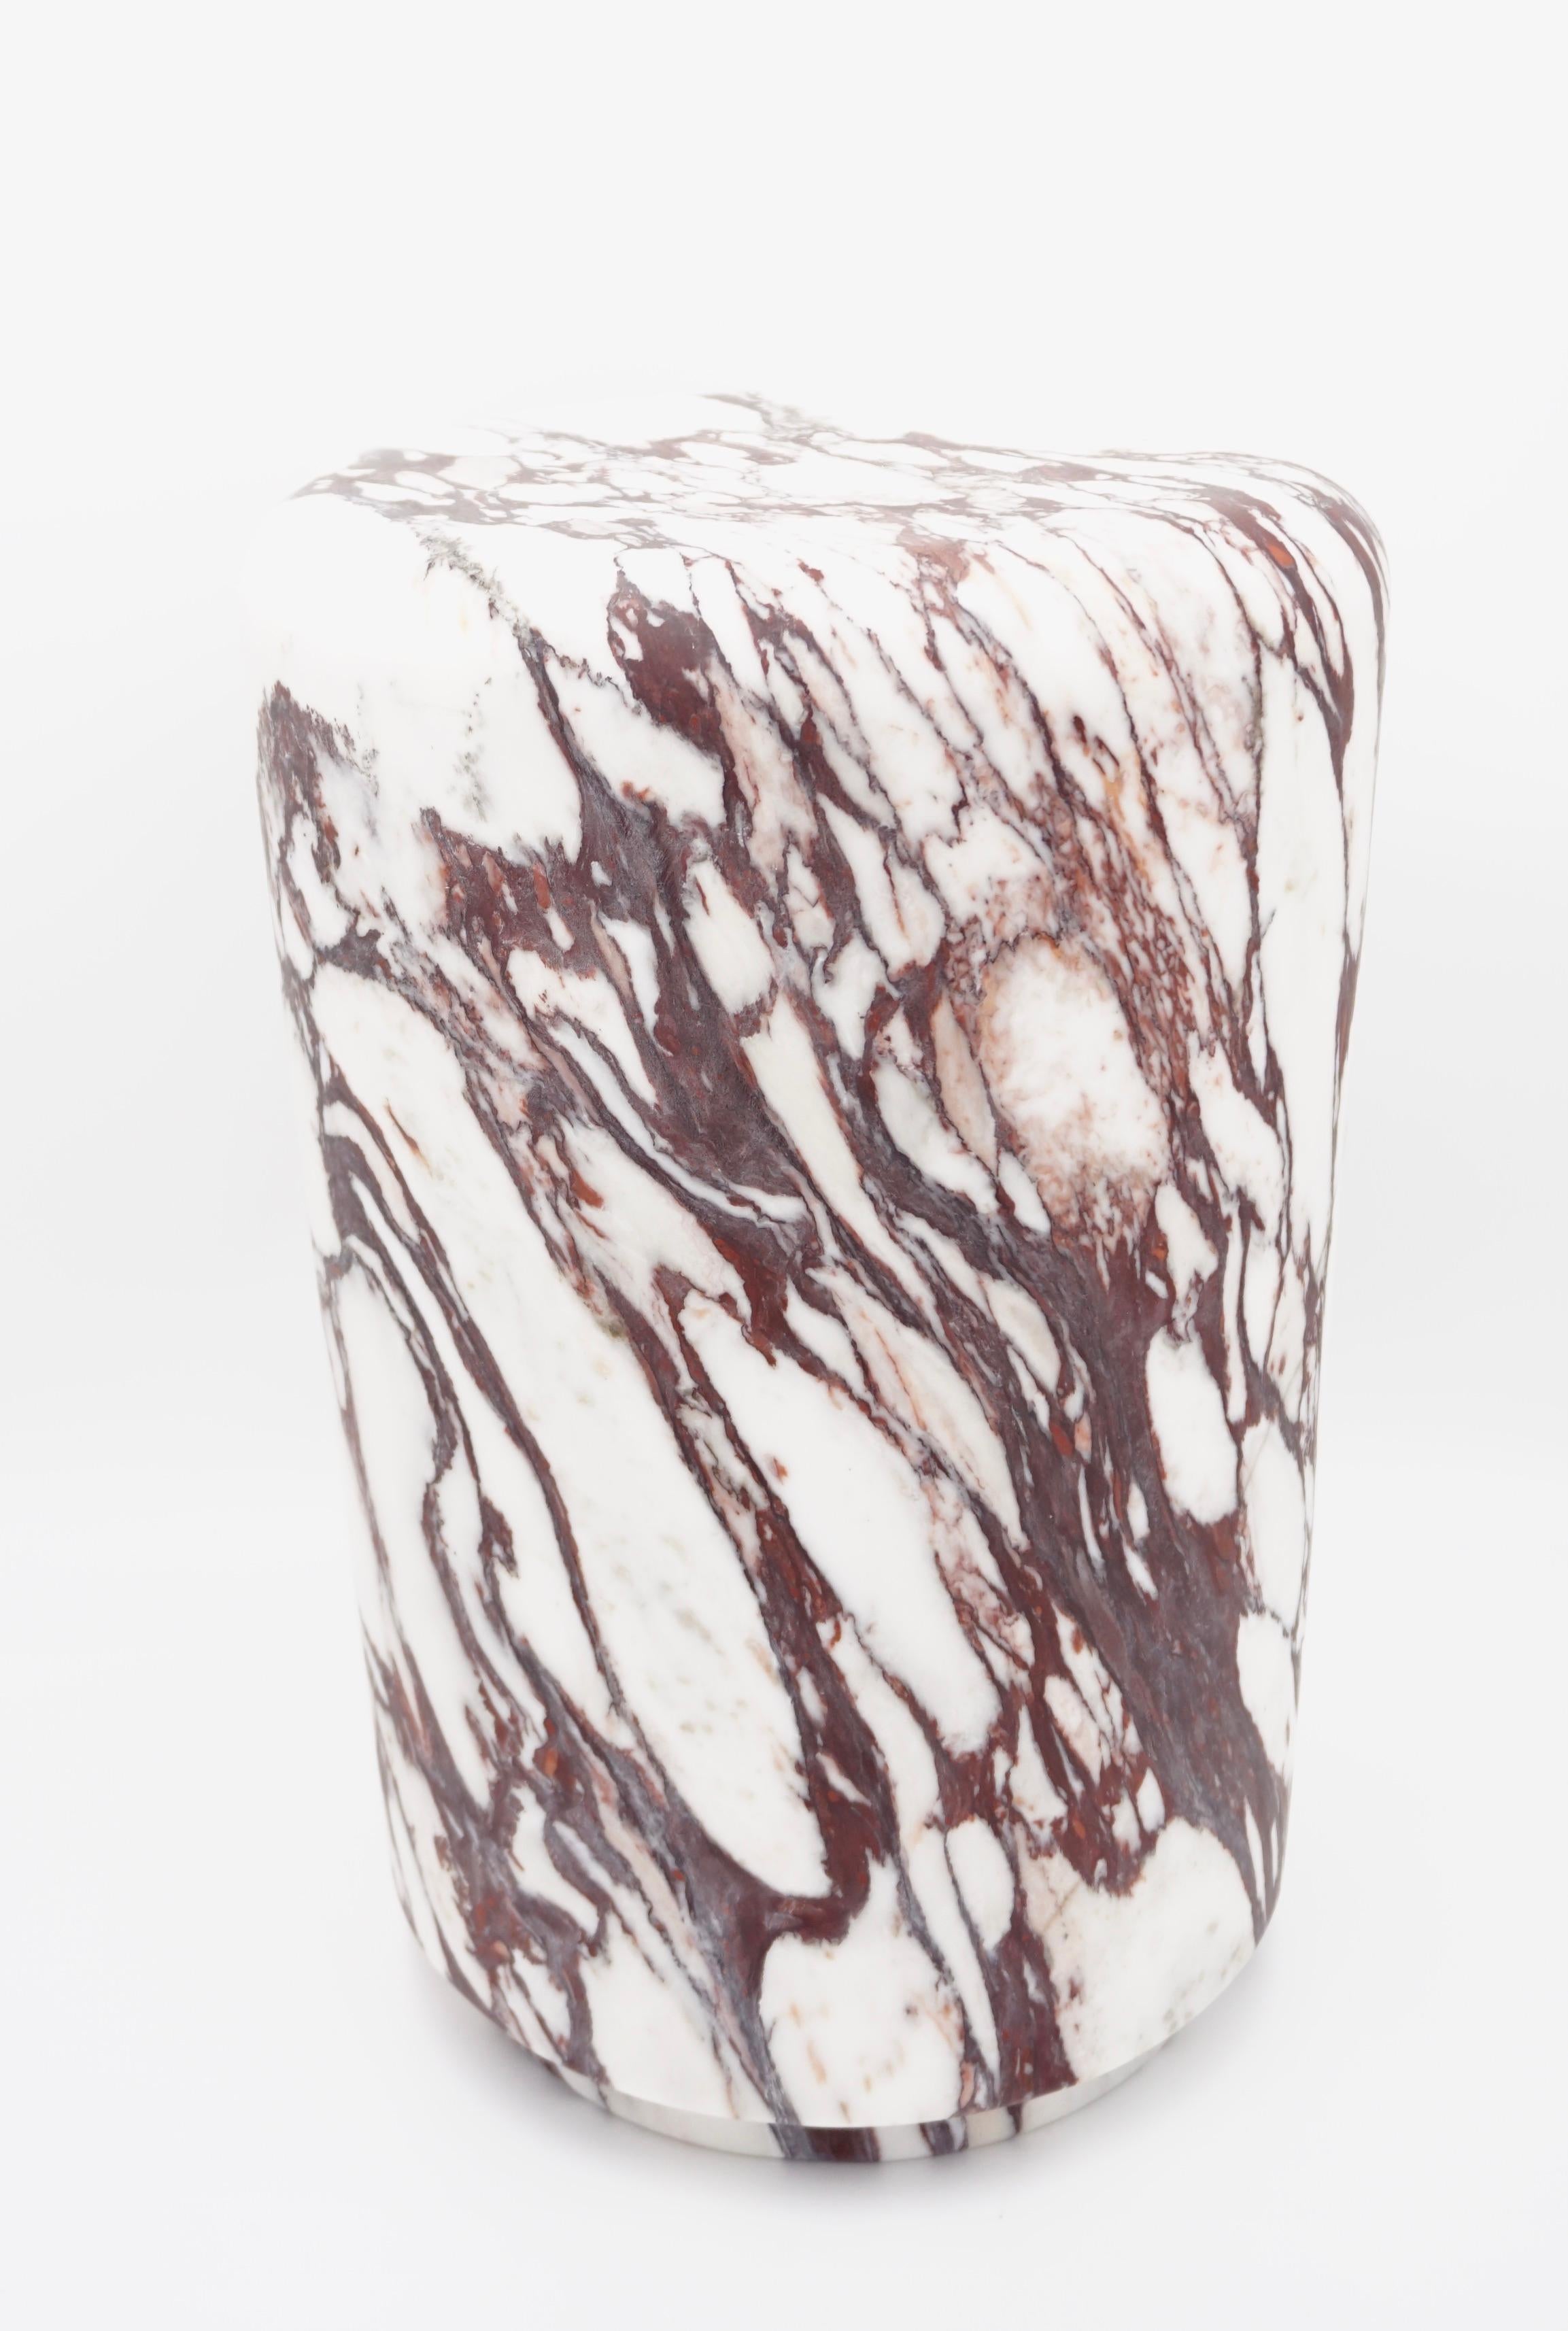 Sculptural breccia medicea marble stool /side table 